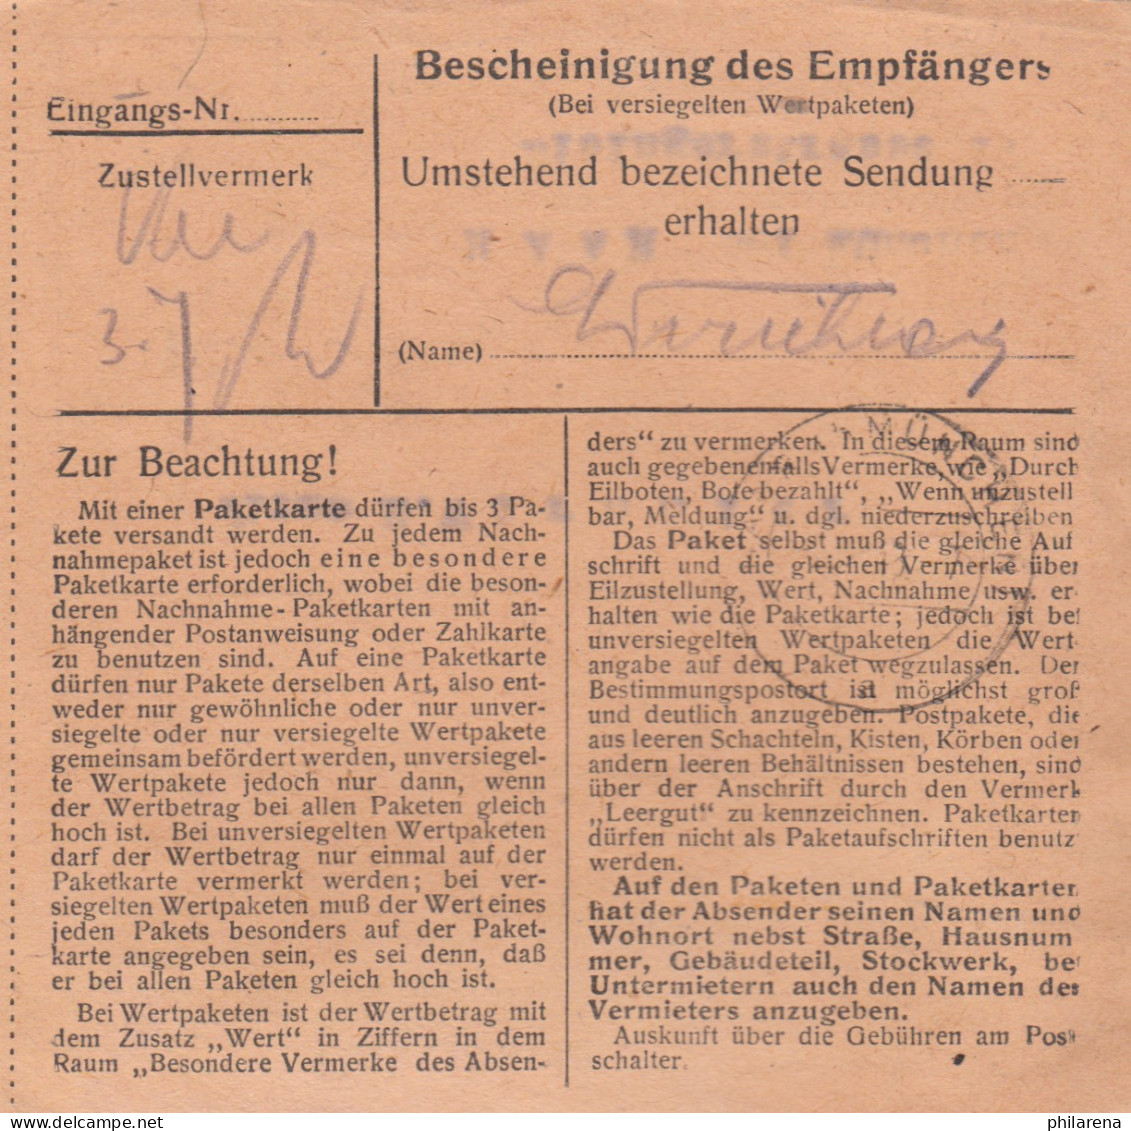 BiZone Paketkarte 1948: Feilnbach, Nordmann KG - Lederwaren -, Nach Haar - Covers & Documents